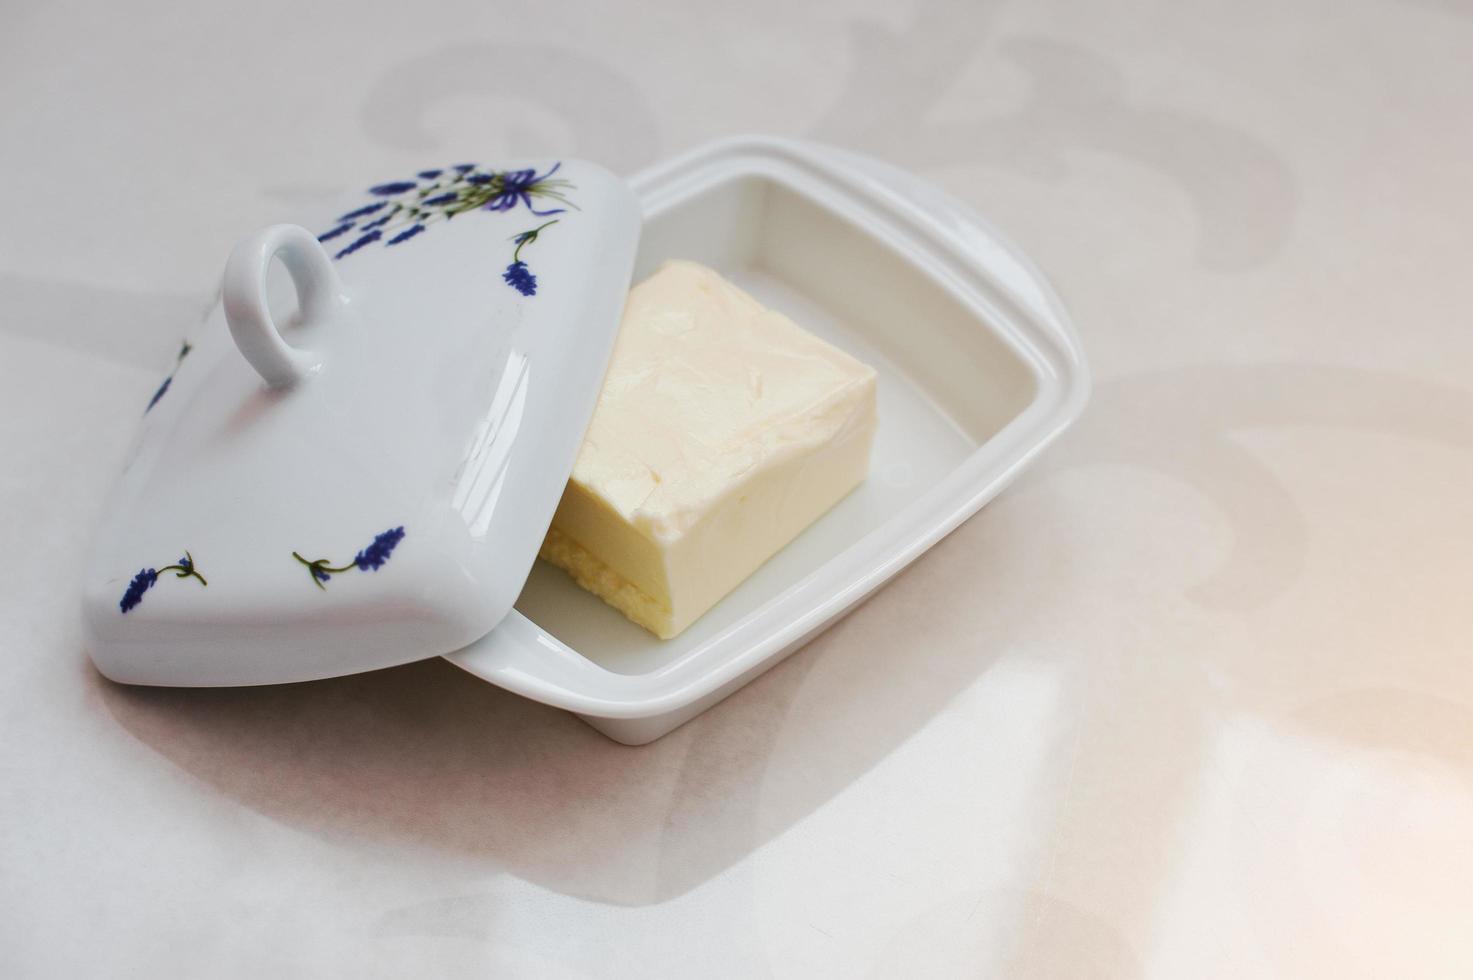 Butterdose aus Keramik mit Lavendel-Spica-Bild foto